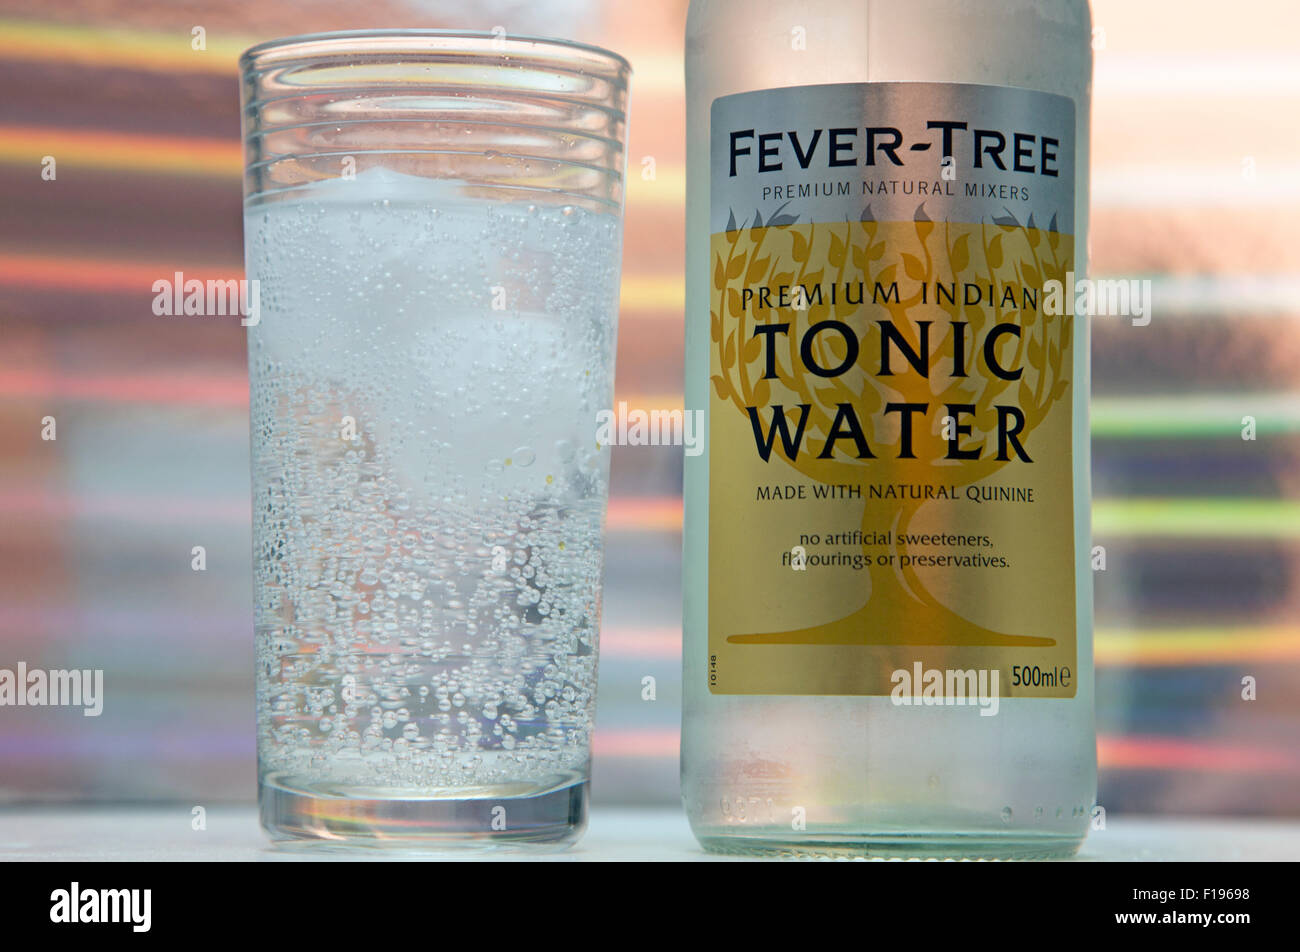 Fever-Tree premium Indian tonic water, London Stock Photo